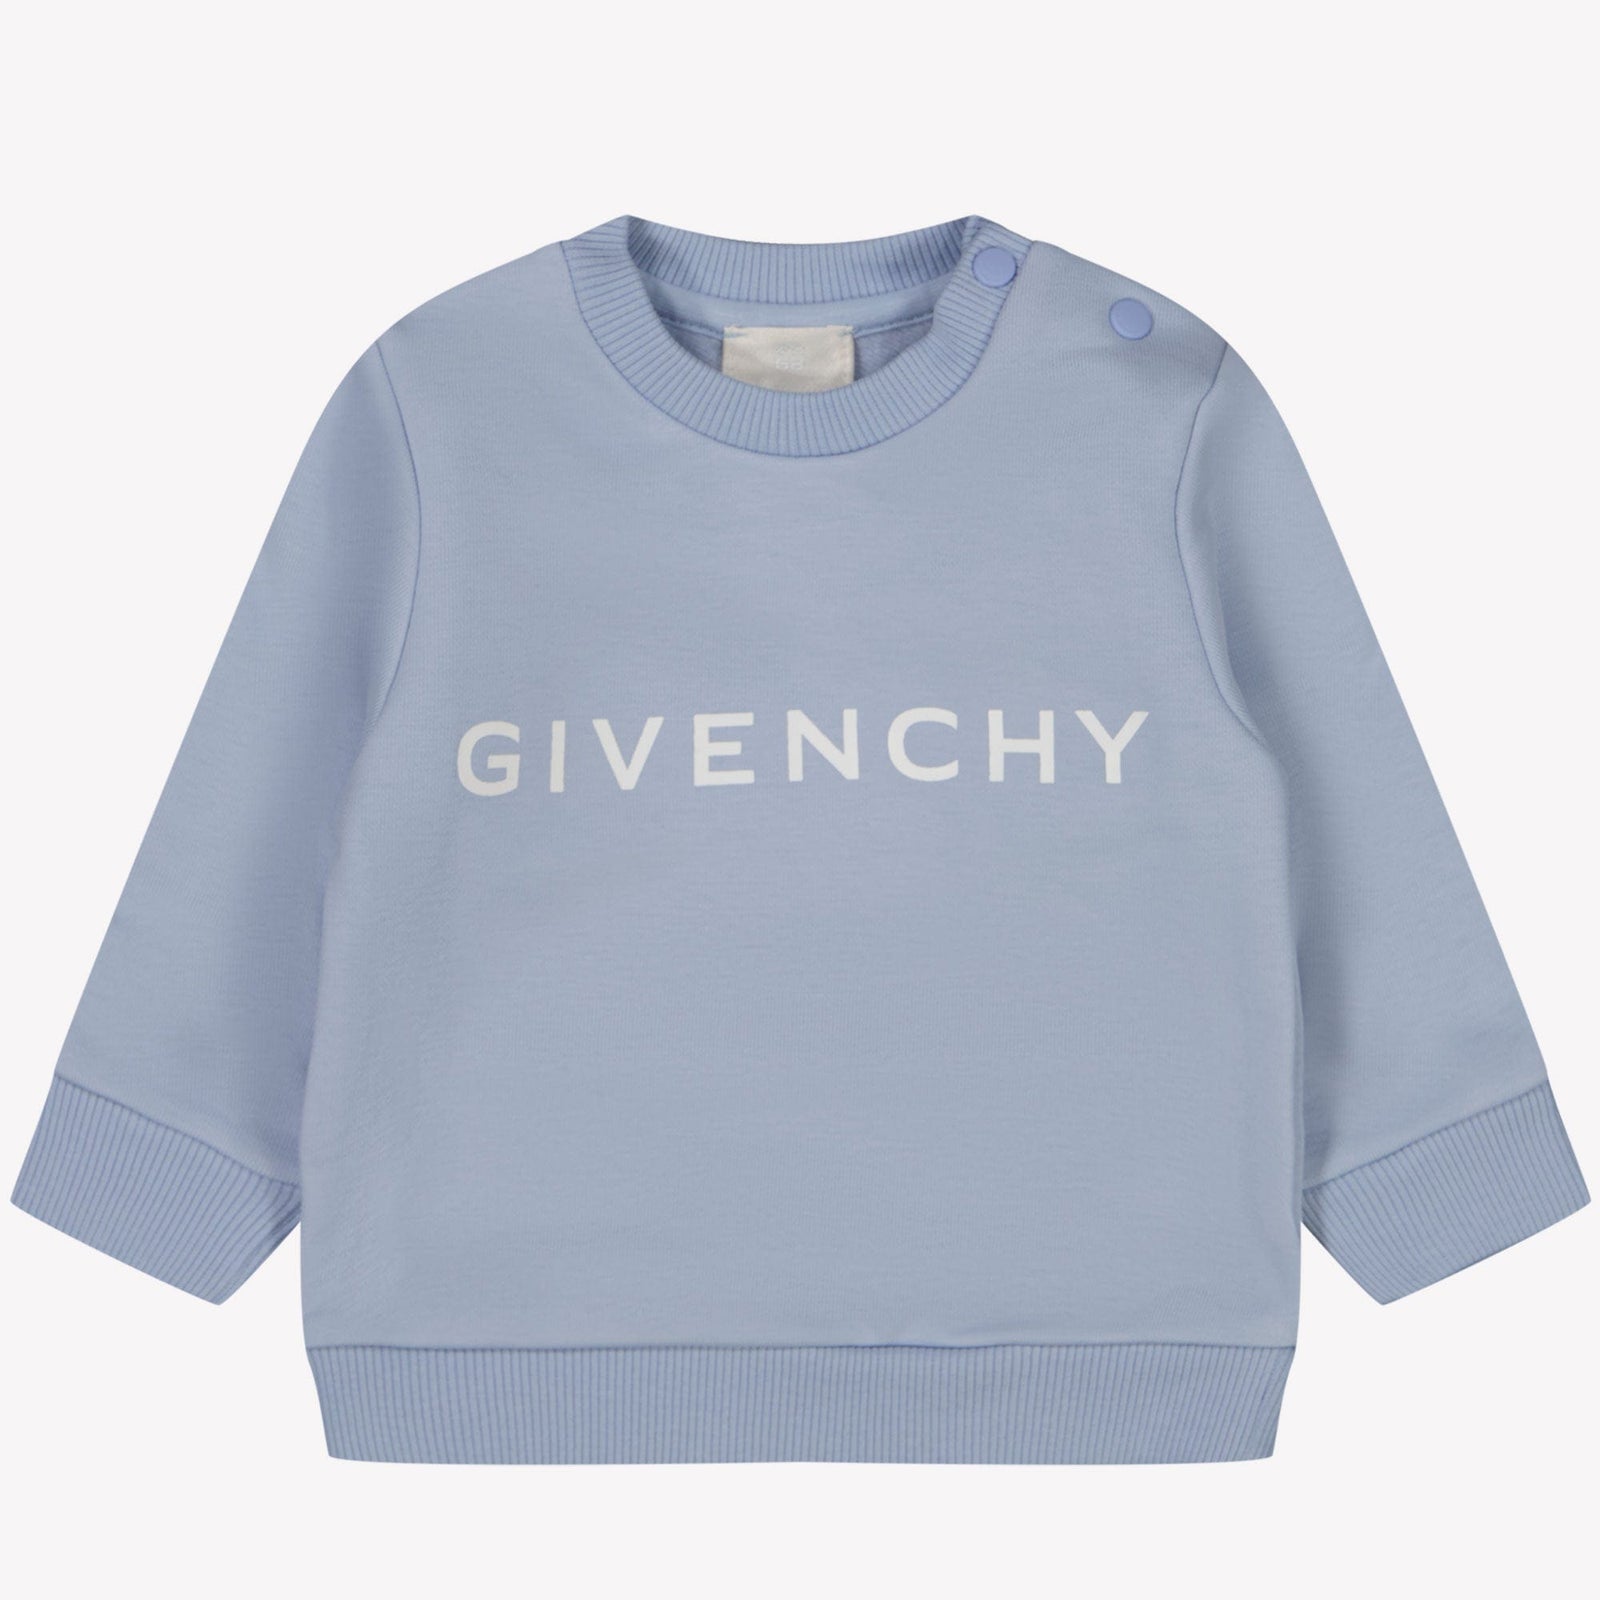 Givenchy Baby Jongens Trui Licht Blauw 6 mnd